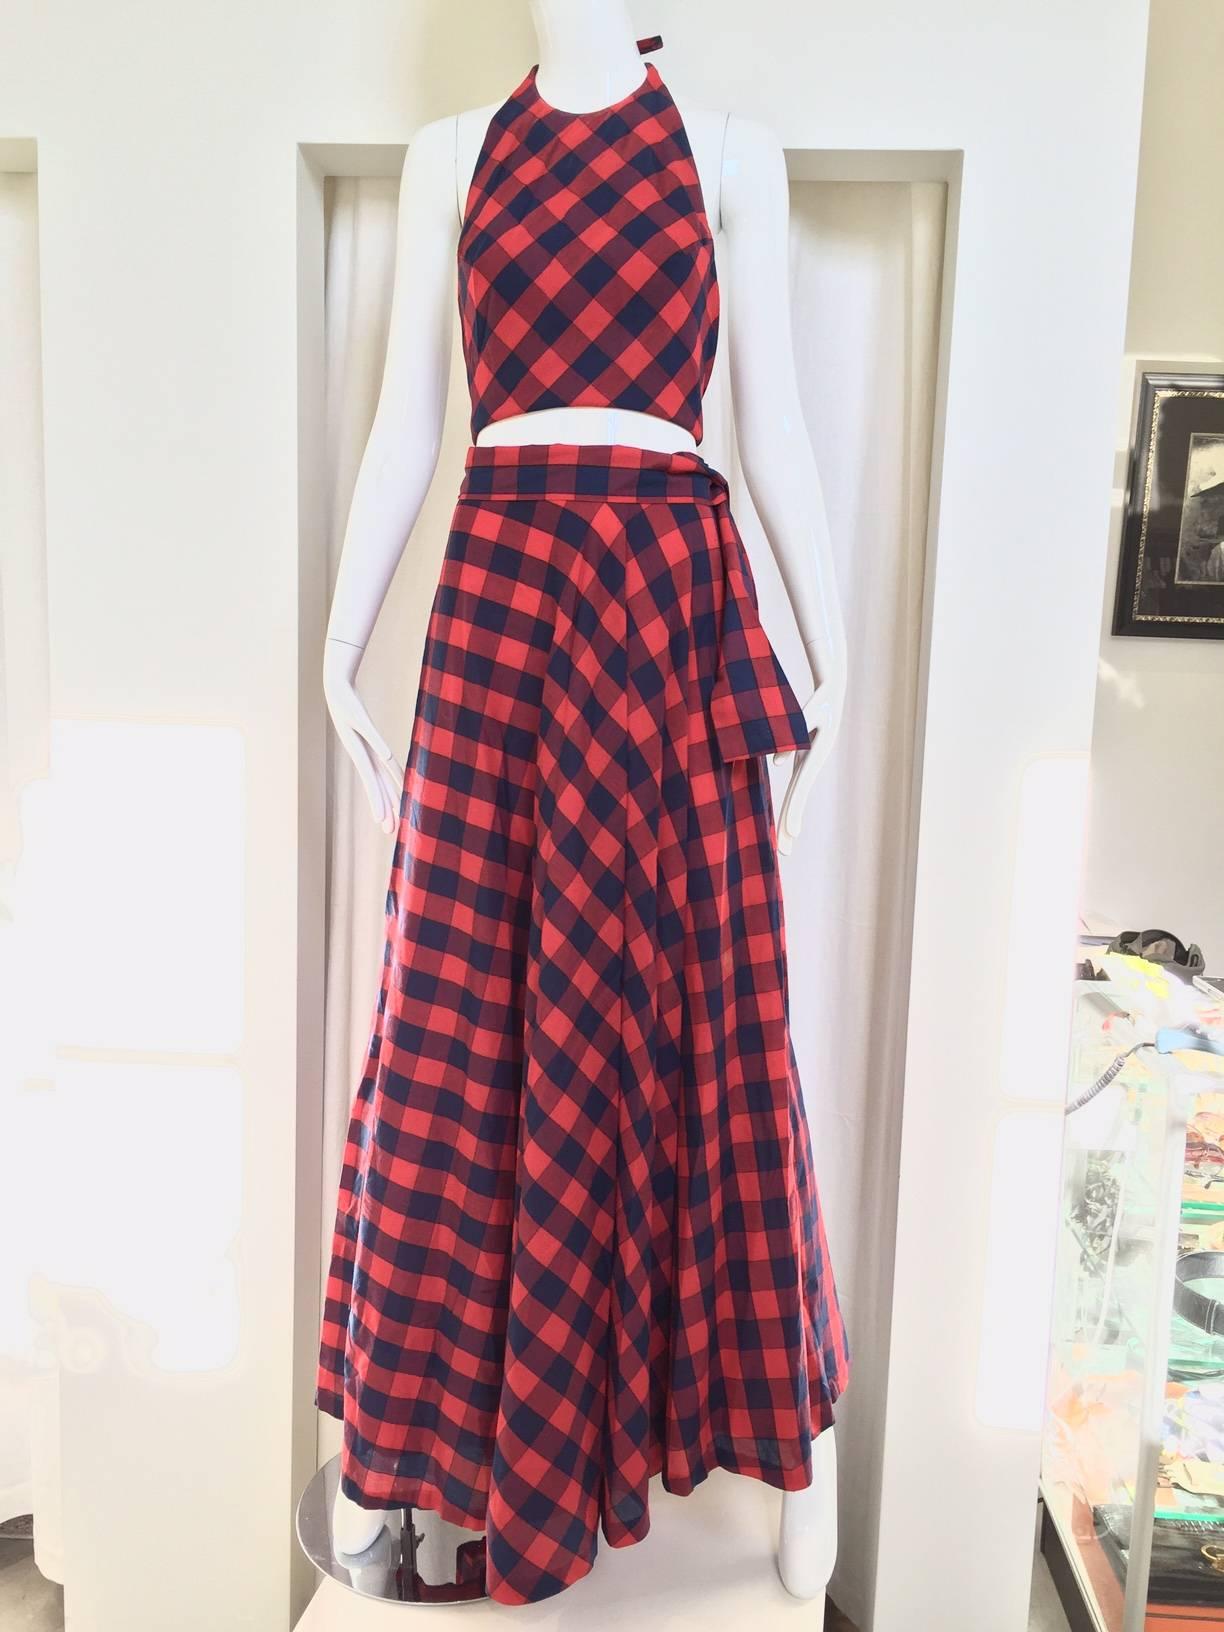 1970s Anne Klein cotton plaid Halter and skirt ensemble. Halter top is reversible.
Halter bust: 32